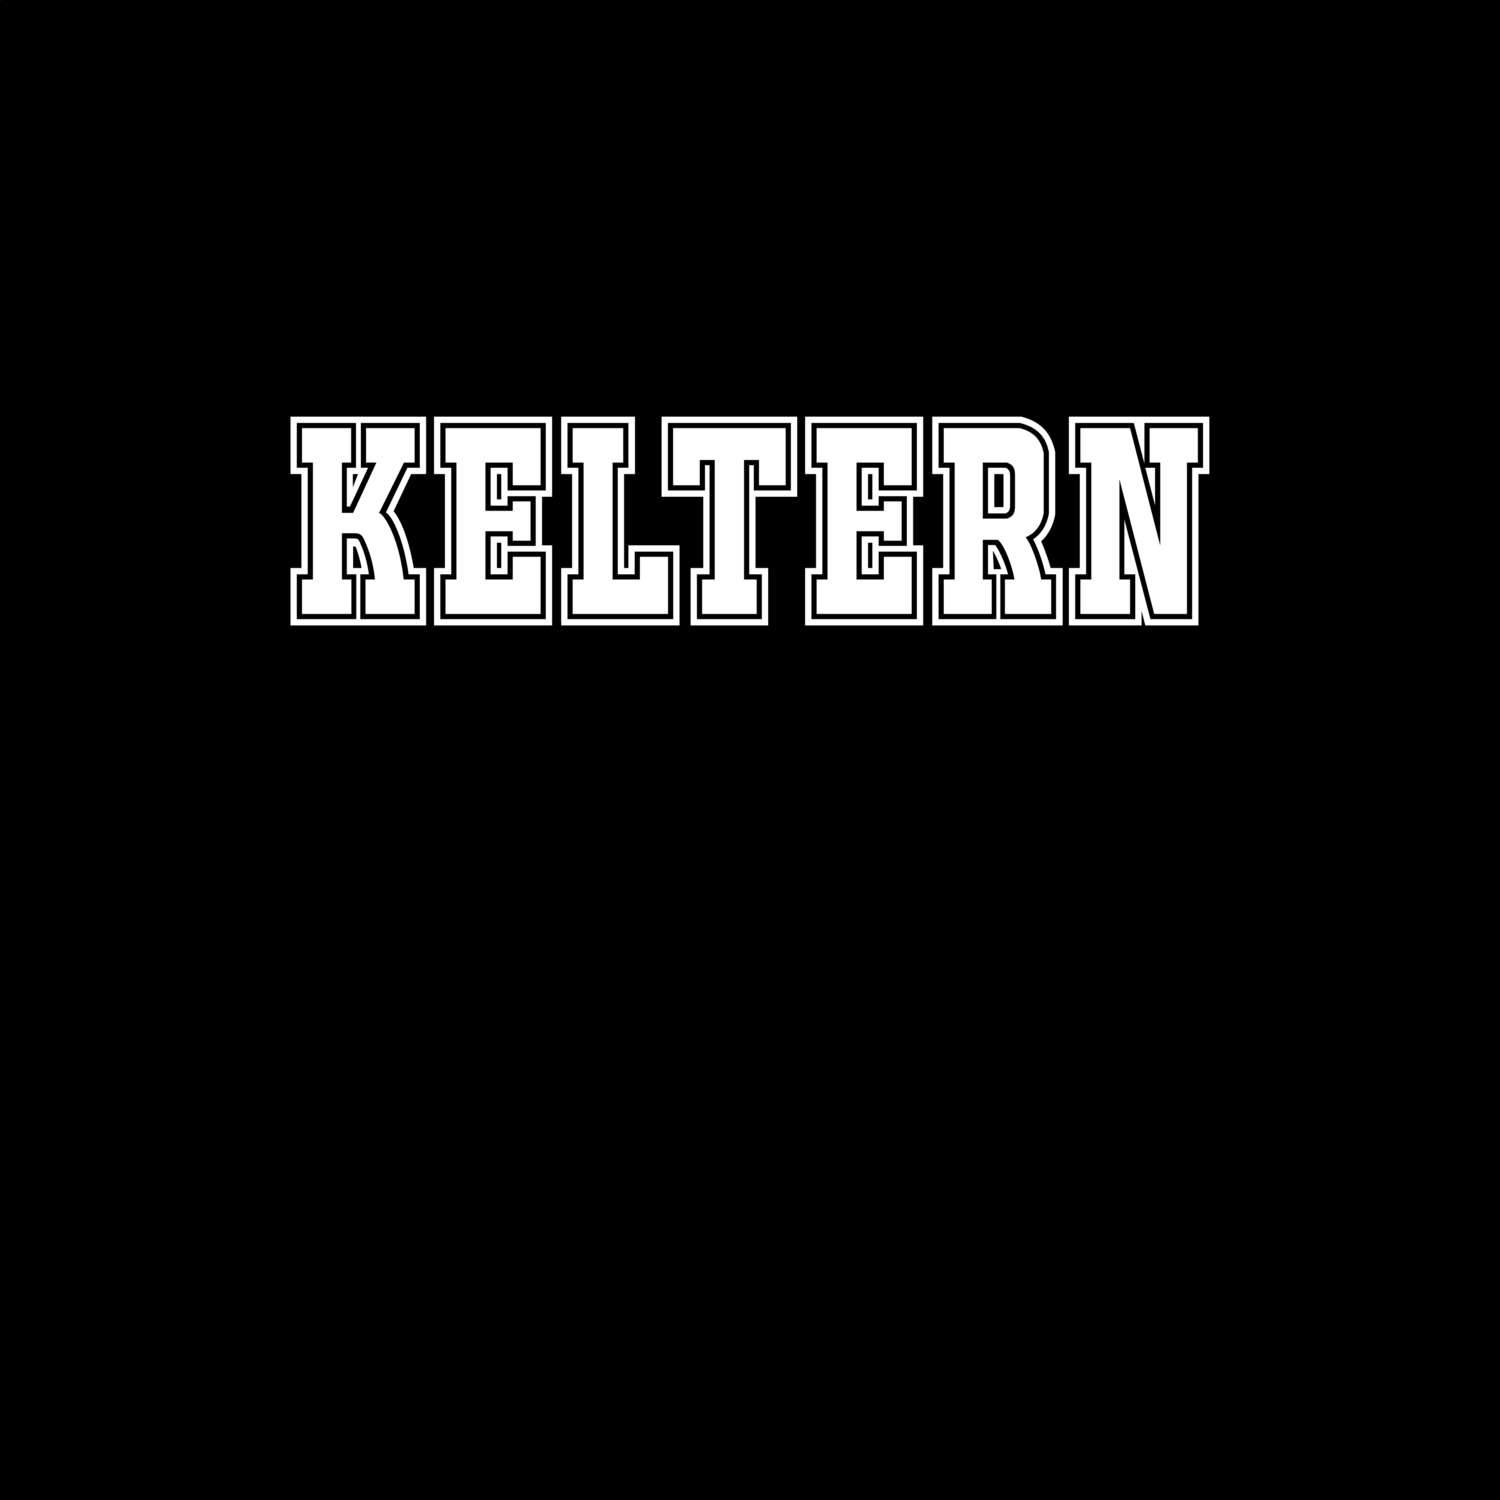 Keltern T-Shirt »Classic«